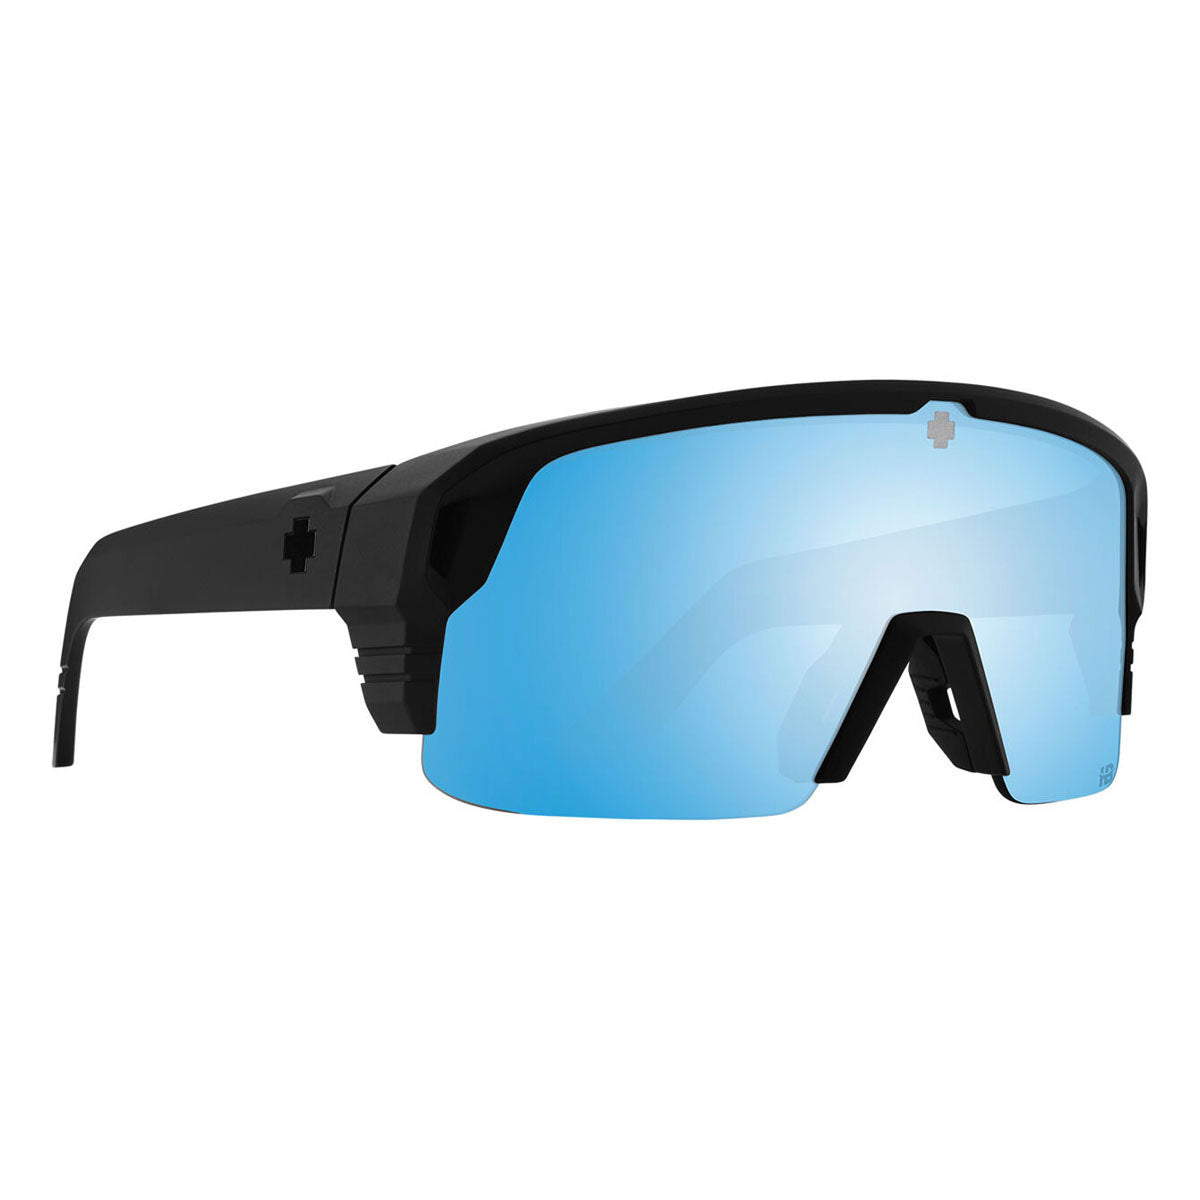 Spy Monolith 5050 Polarized Sunglasses - Matte Black / Happy Boost Polar Ice Blue Mirror